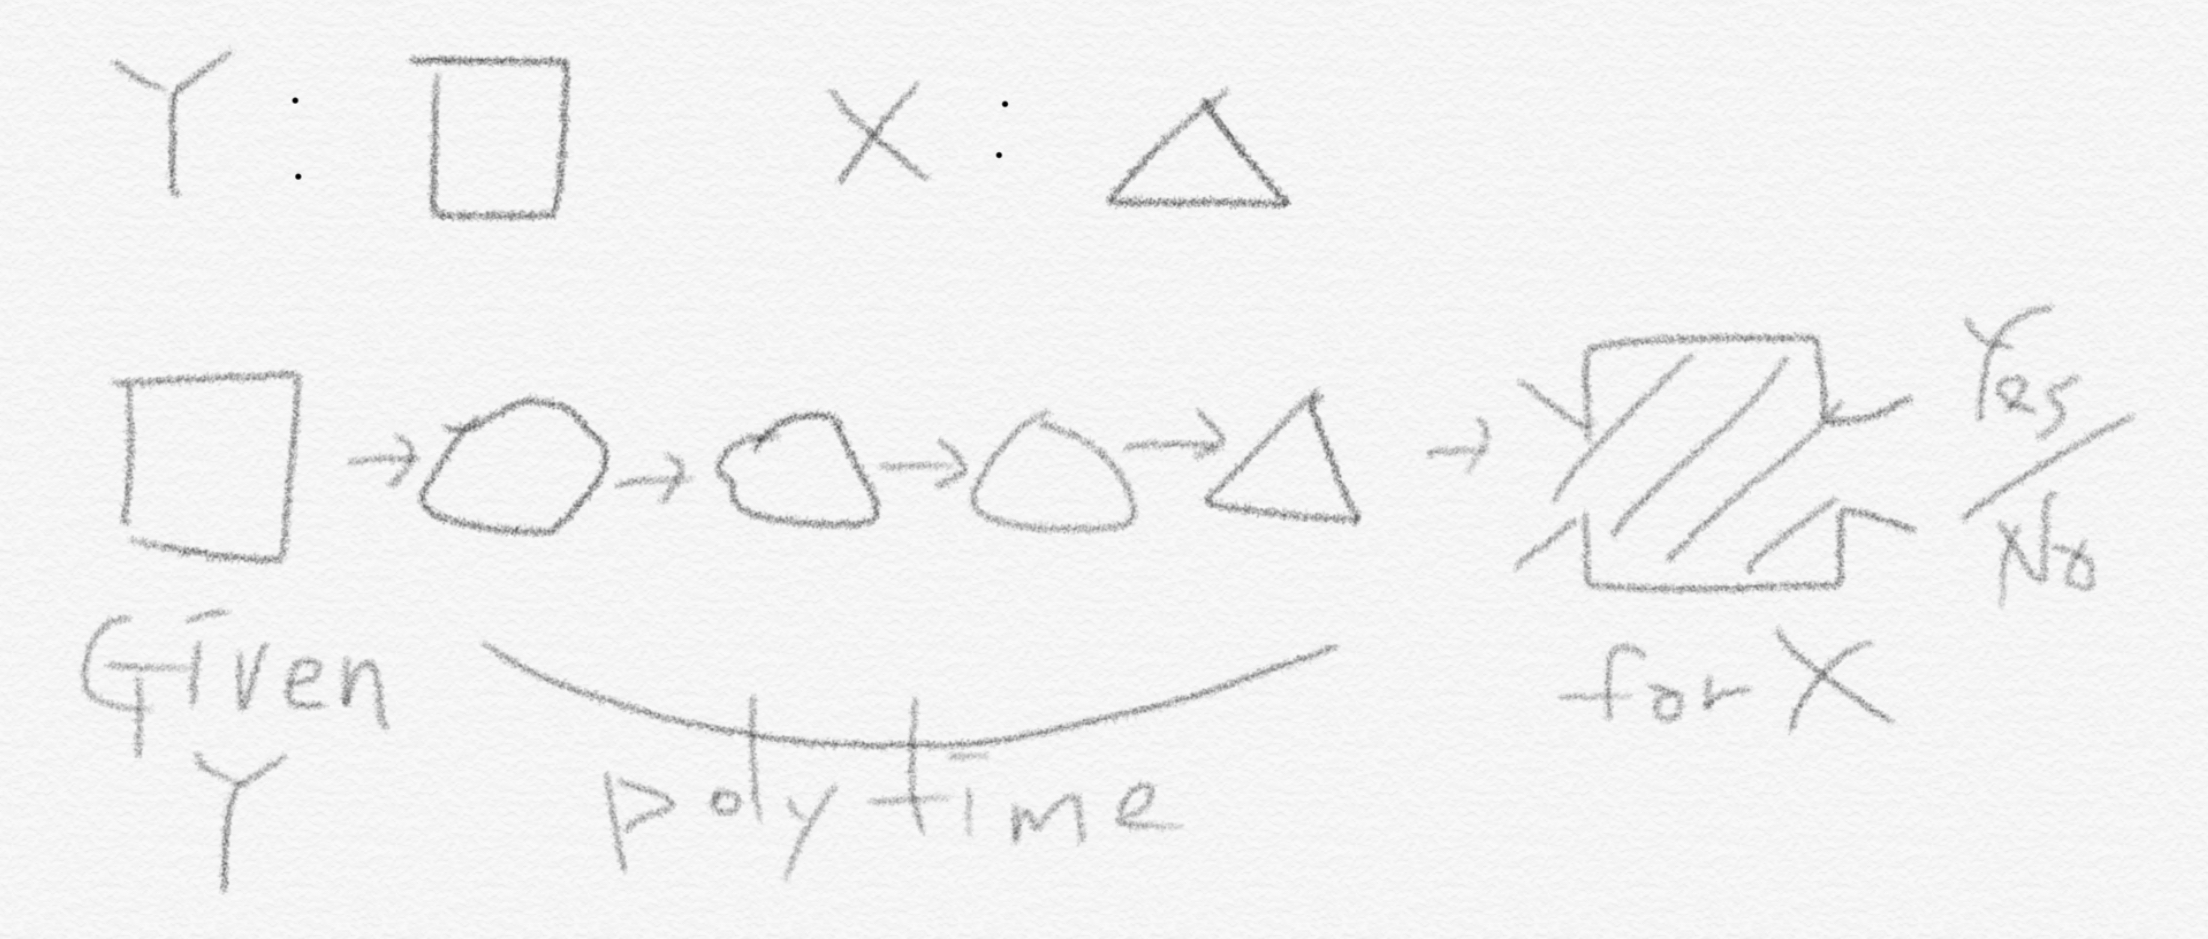 Polynomial-time reducible